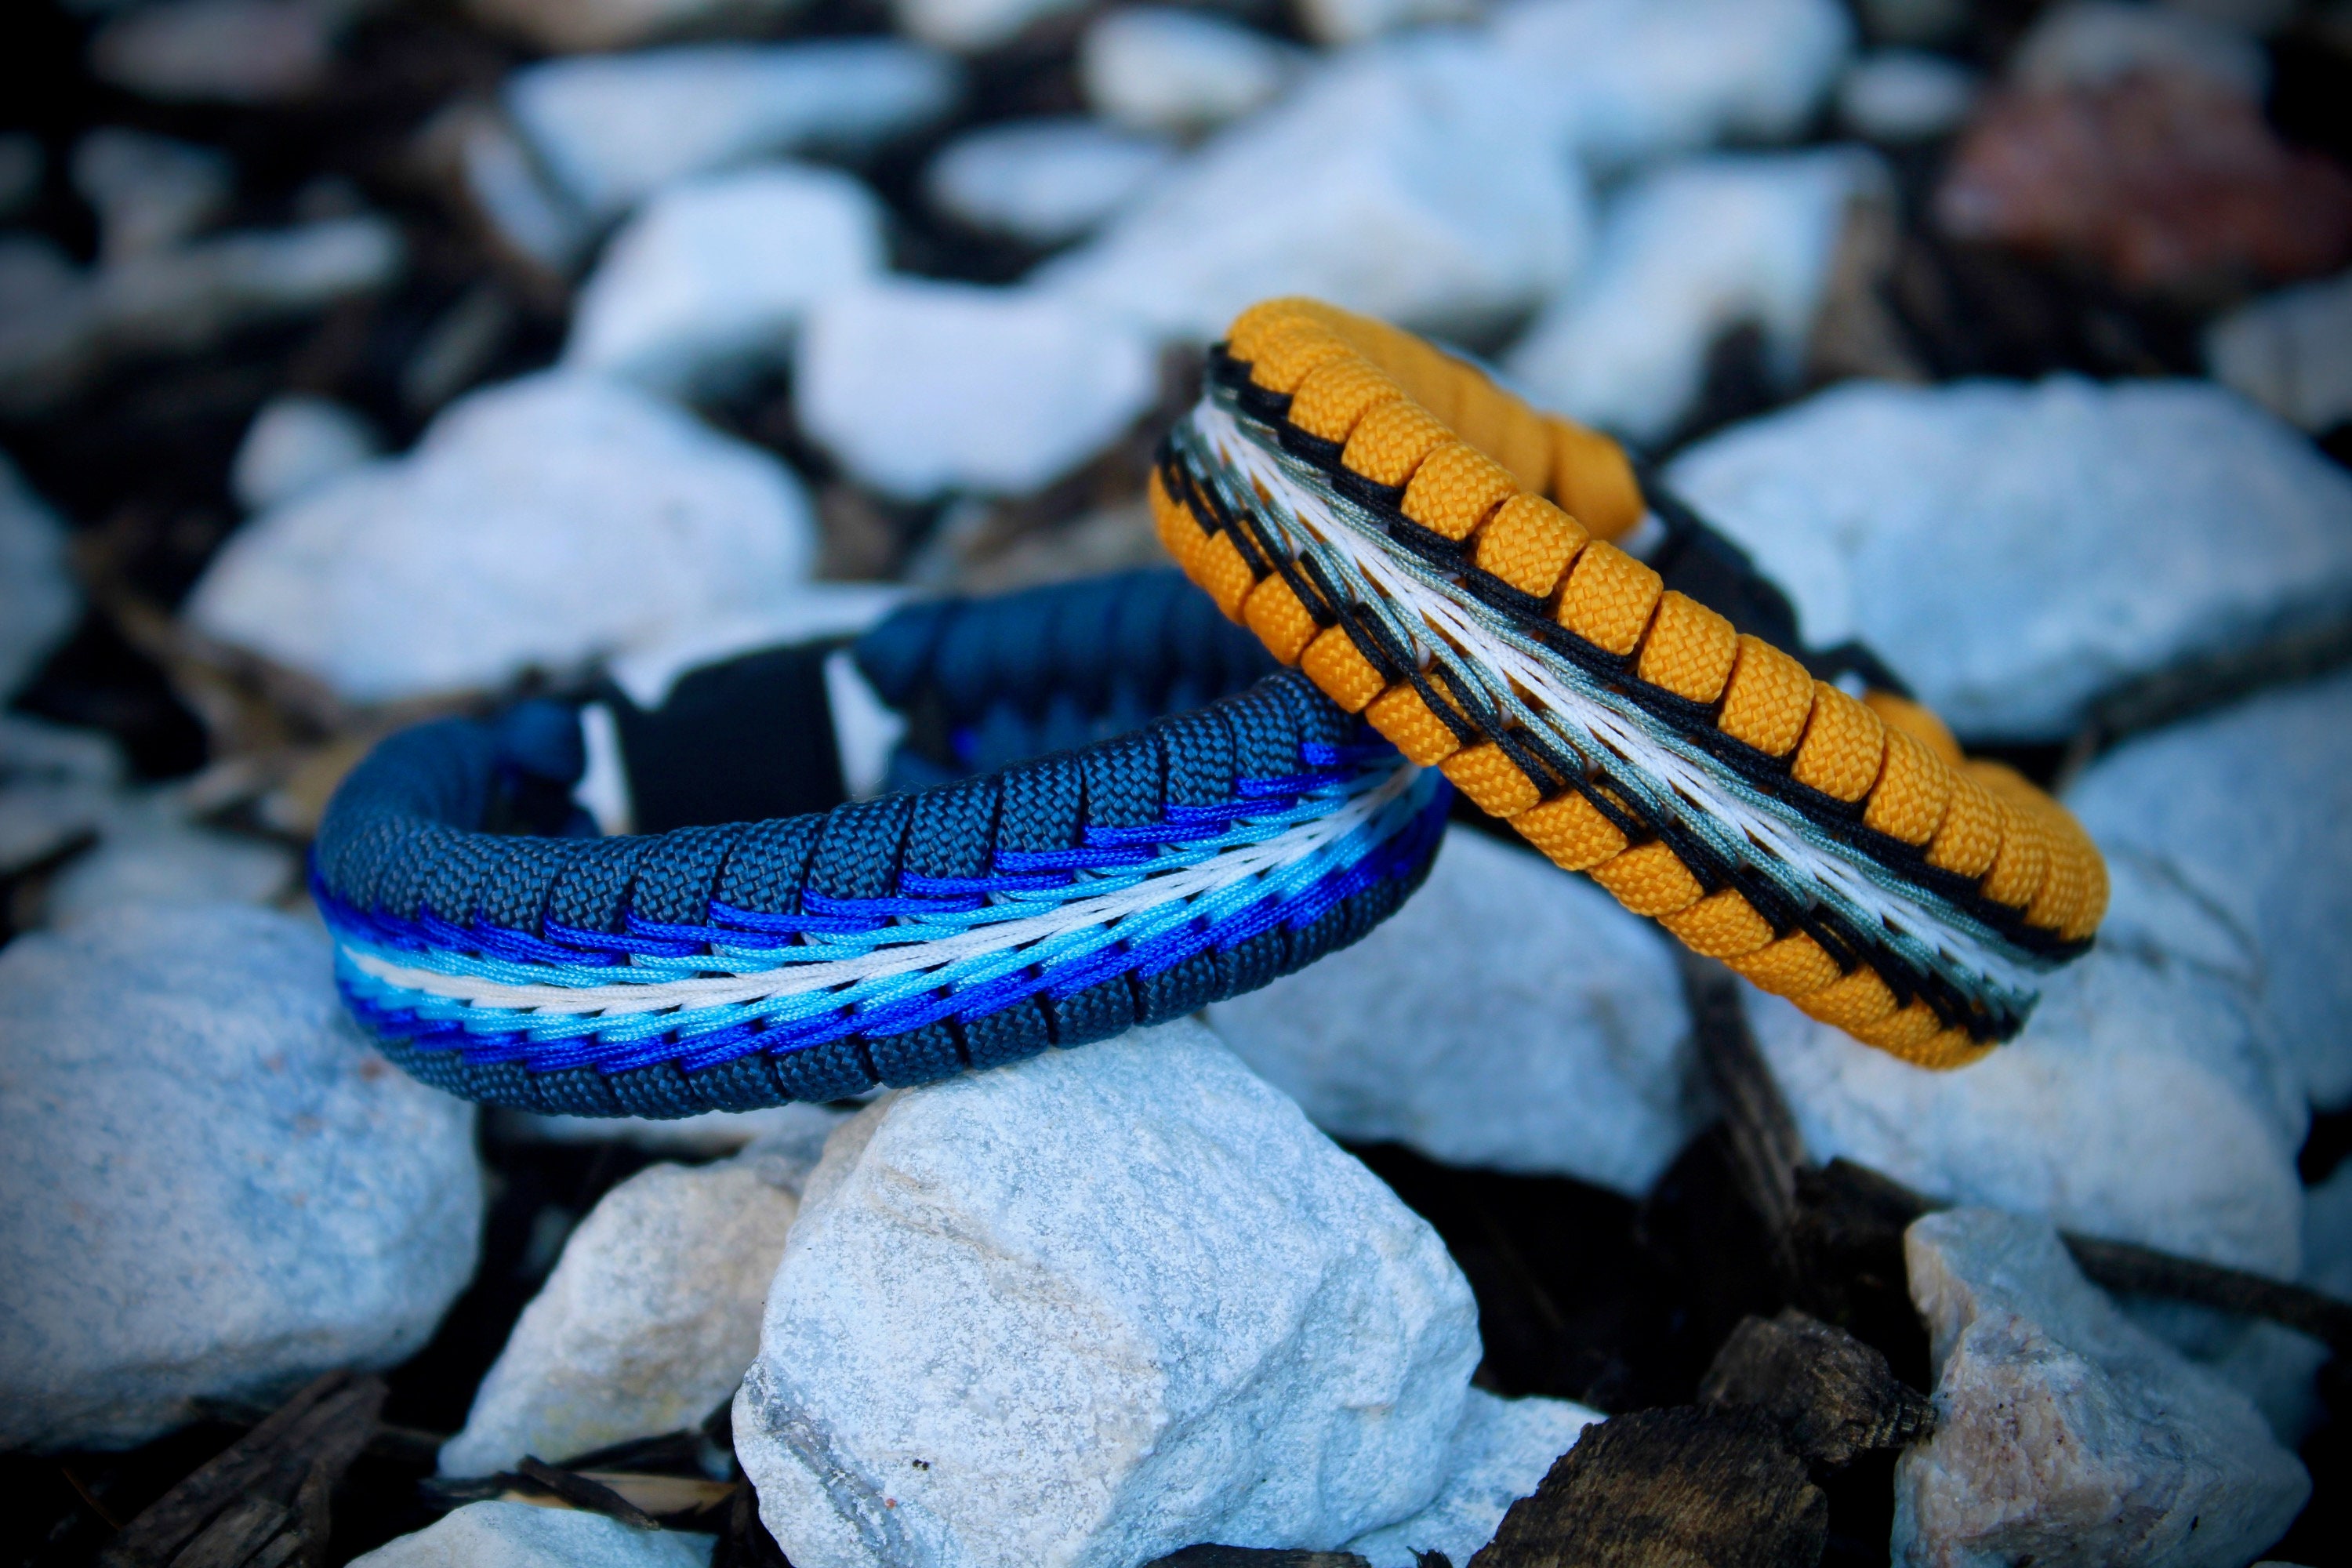 Custom Stitched Fishtail Paracord Bracelet (Solid Colors) 8